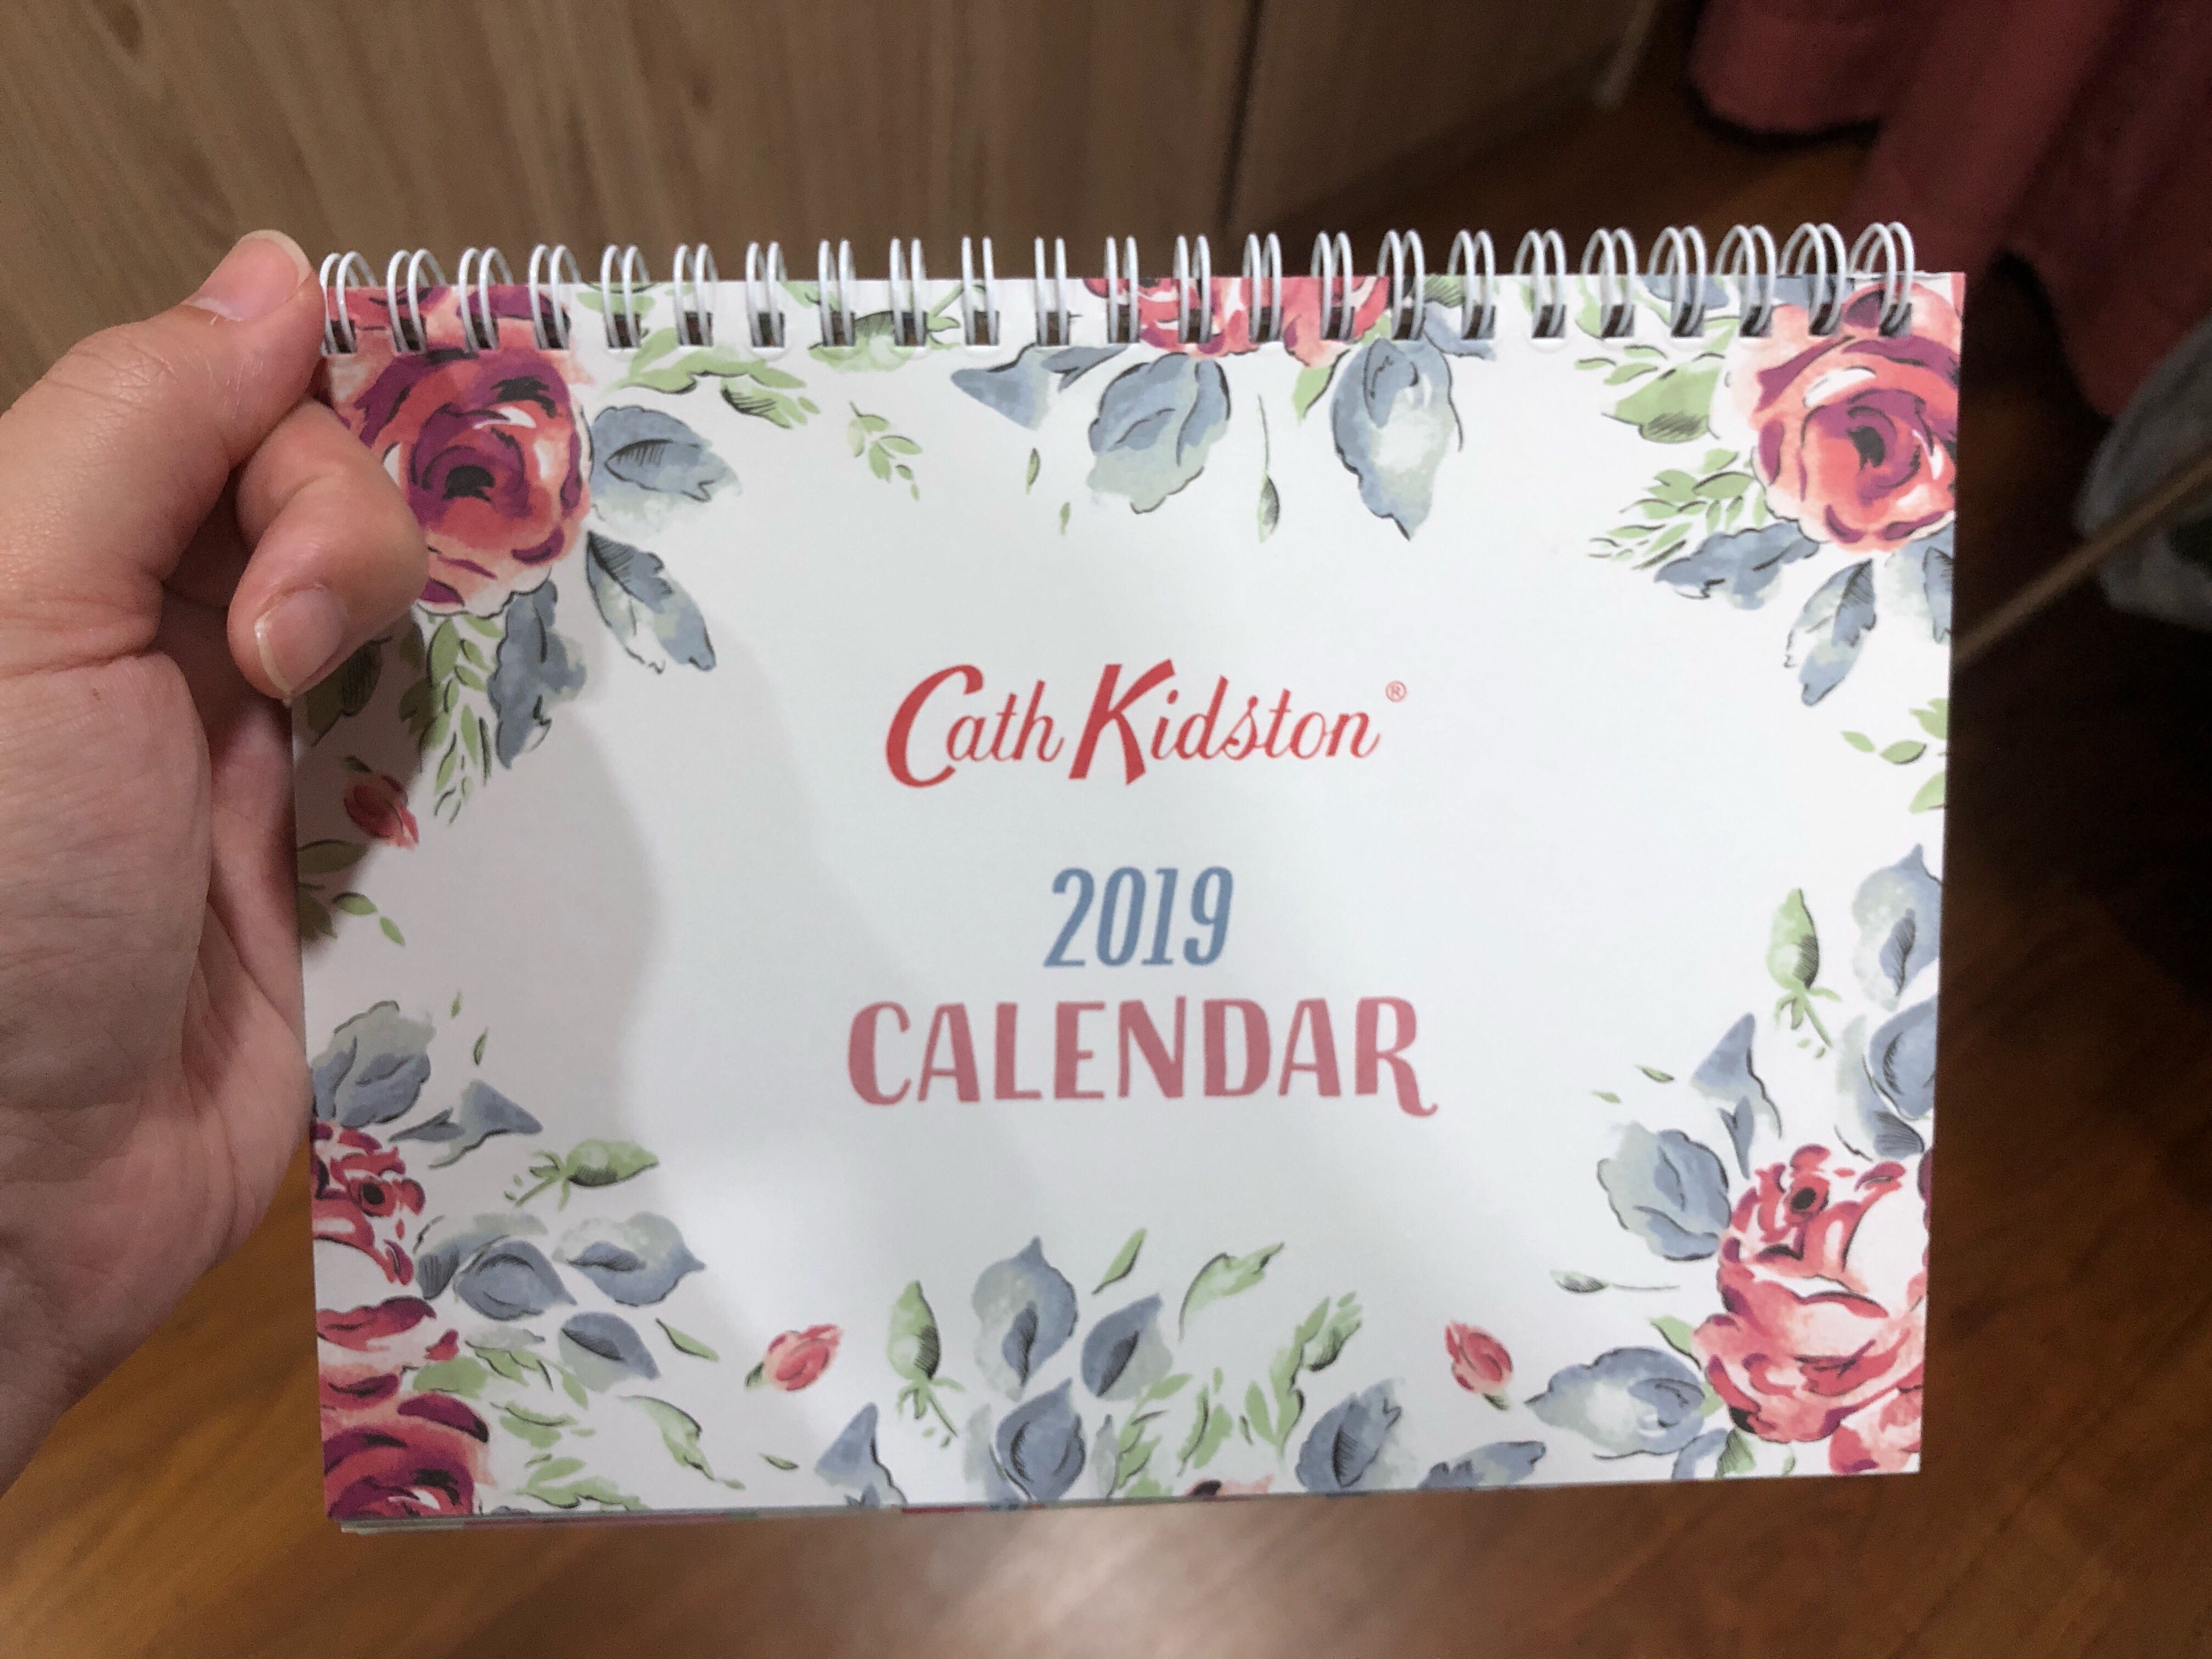 cath kidston 2019 calendar